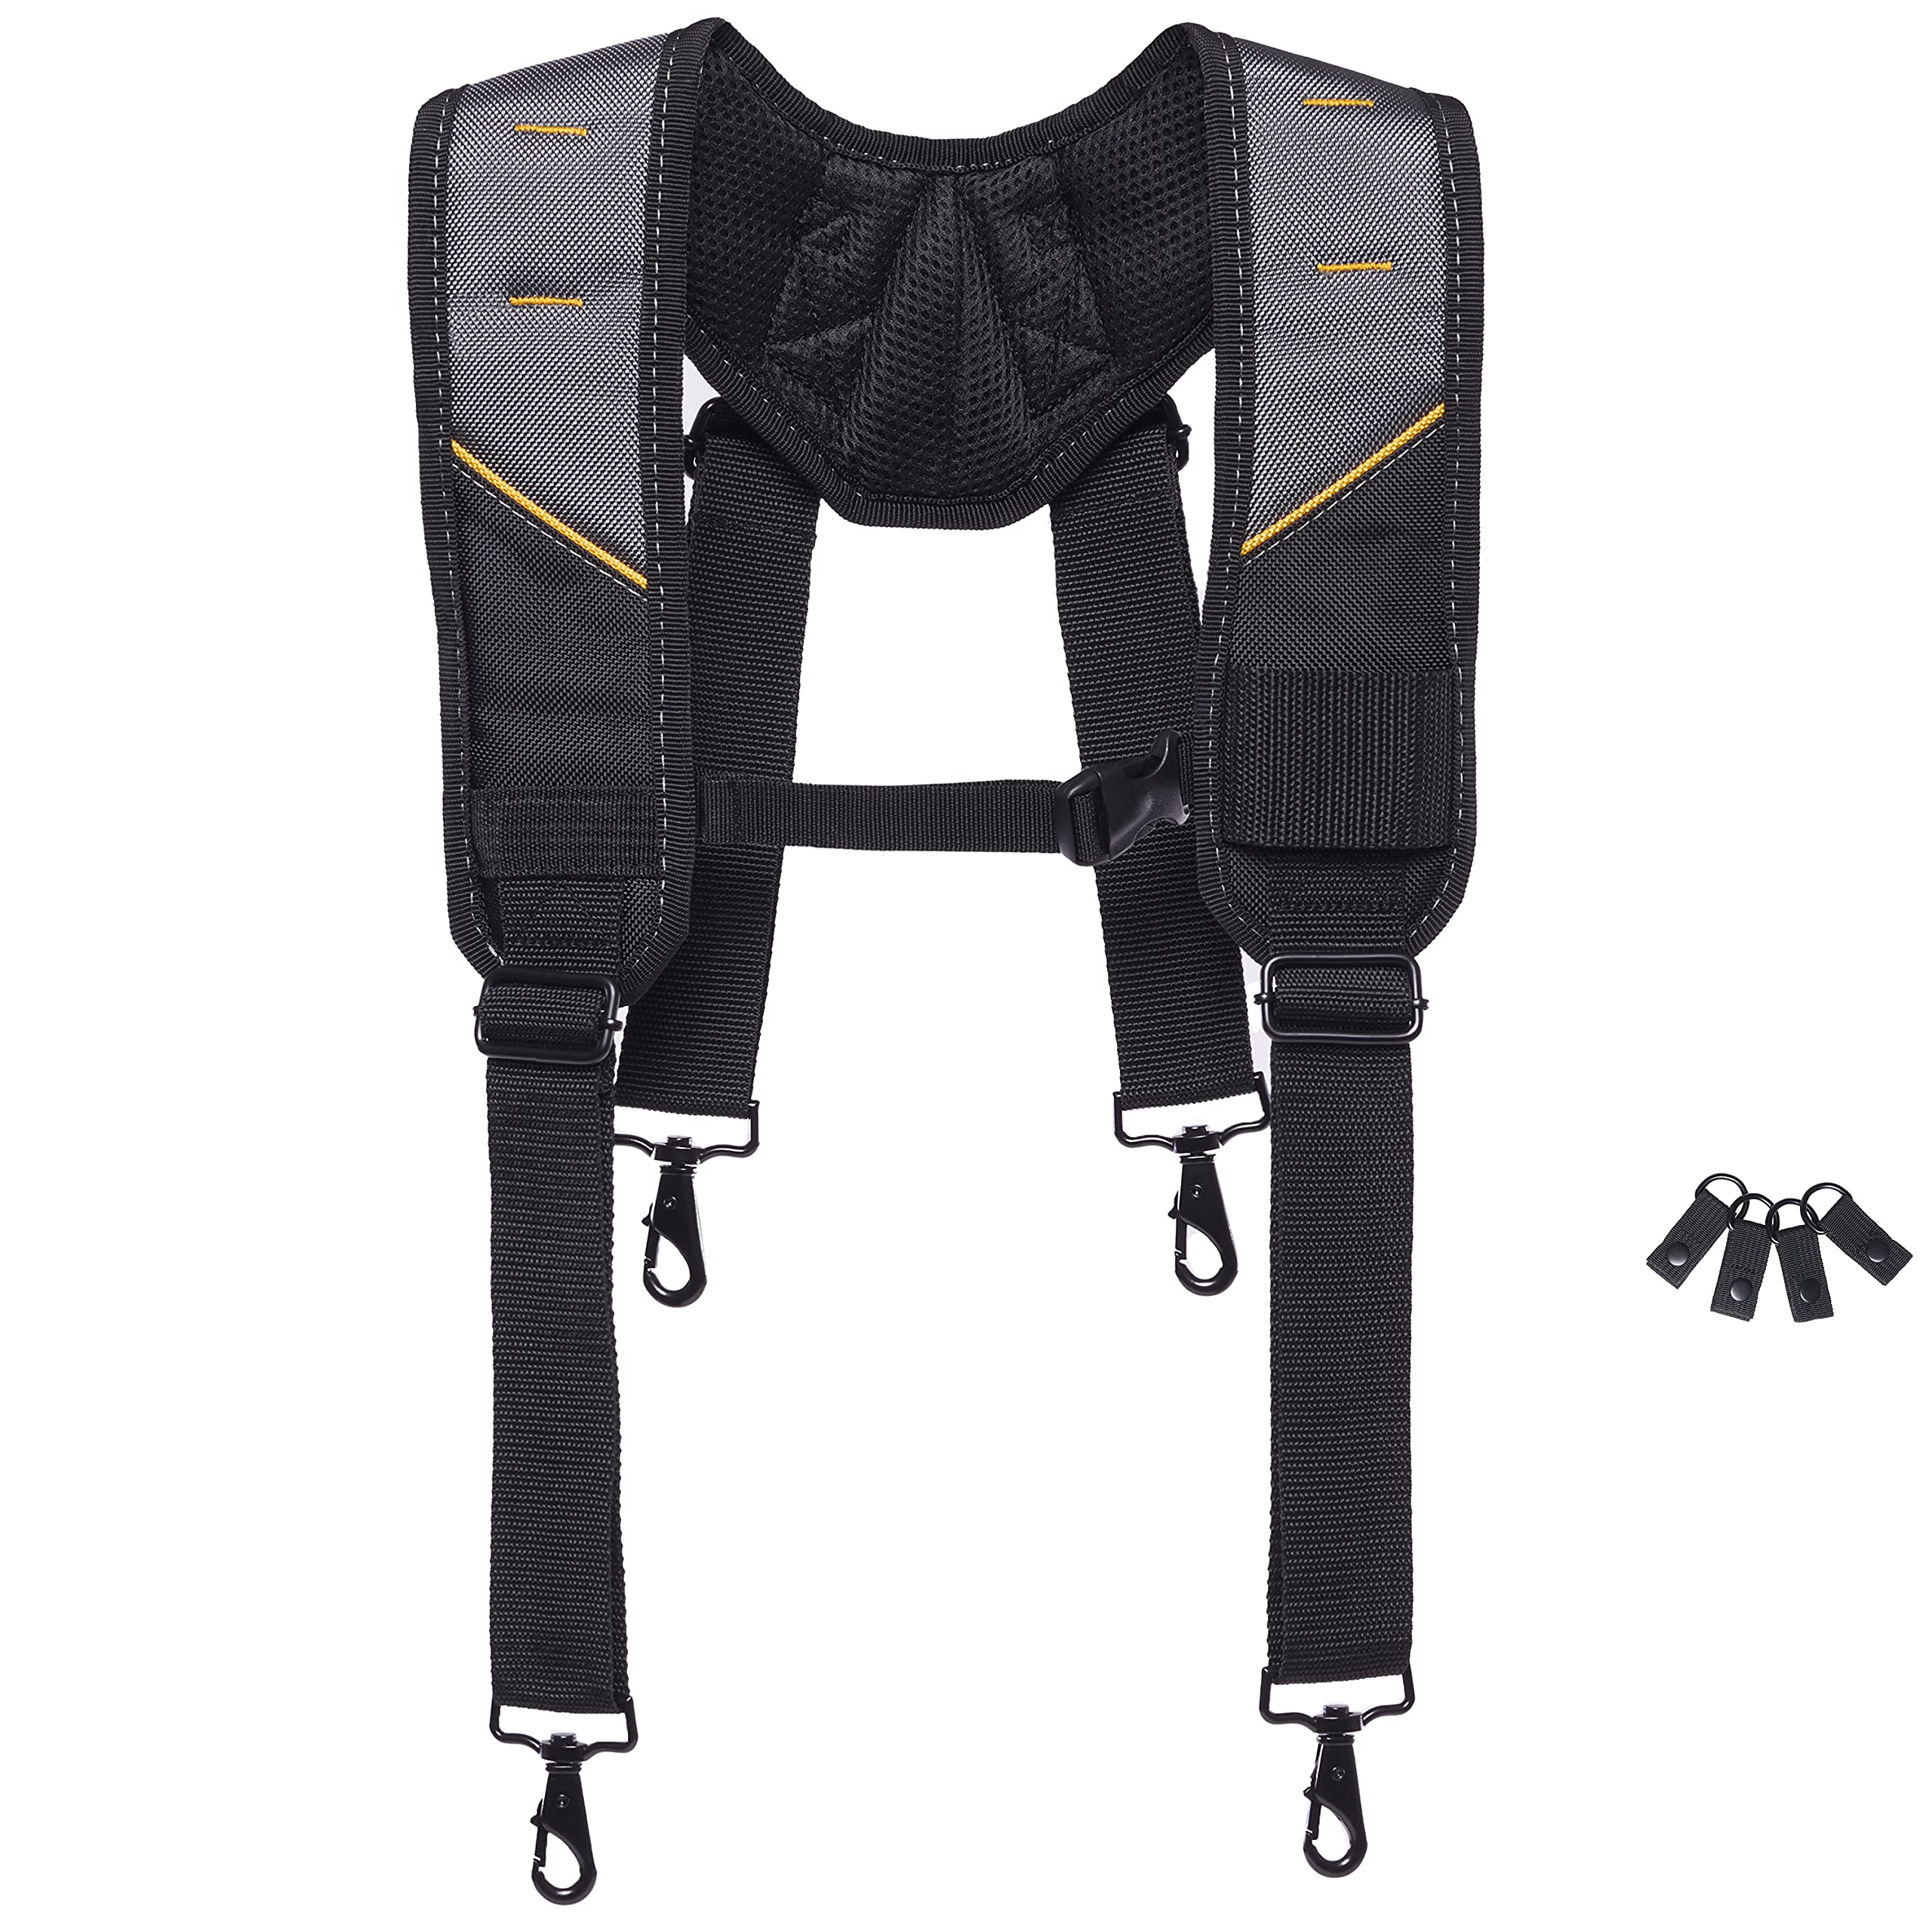 Toughbuilt CT-51P Pro Padded Suspenders